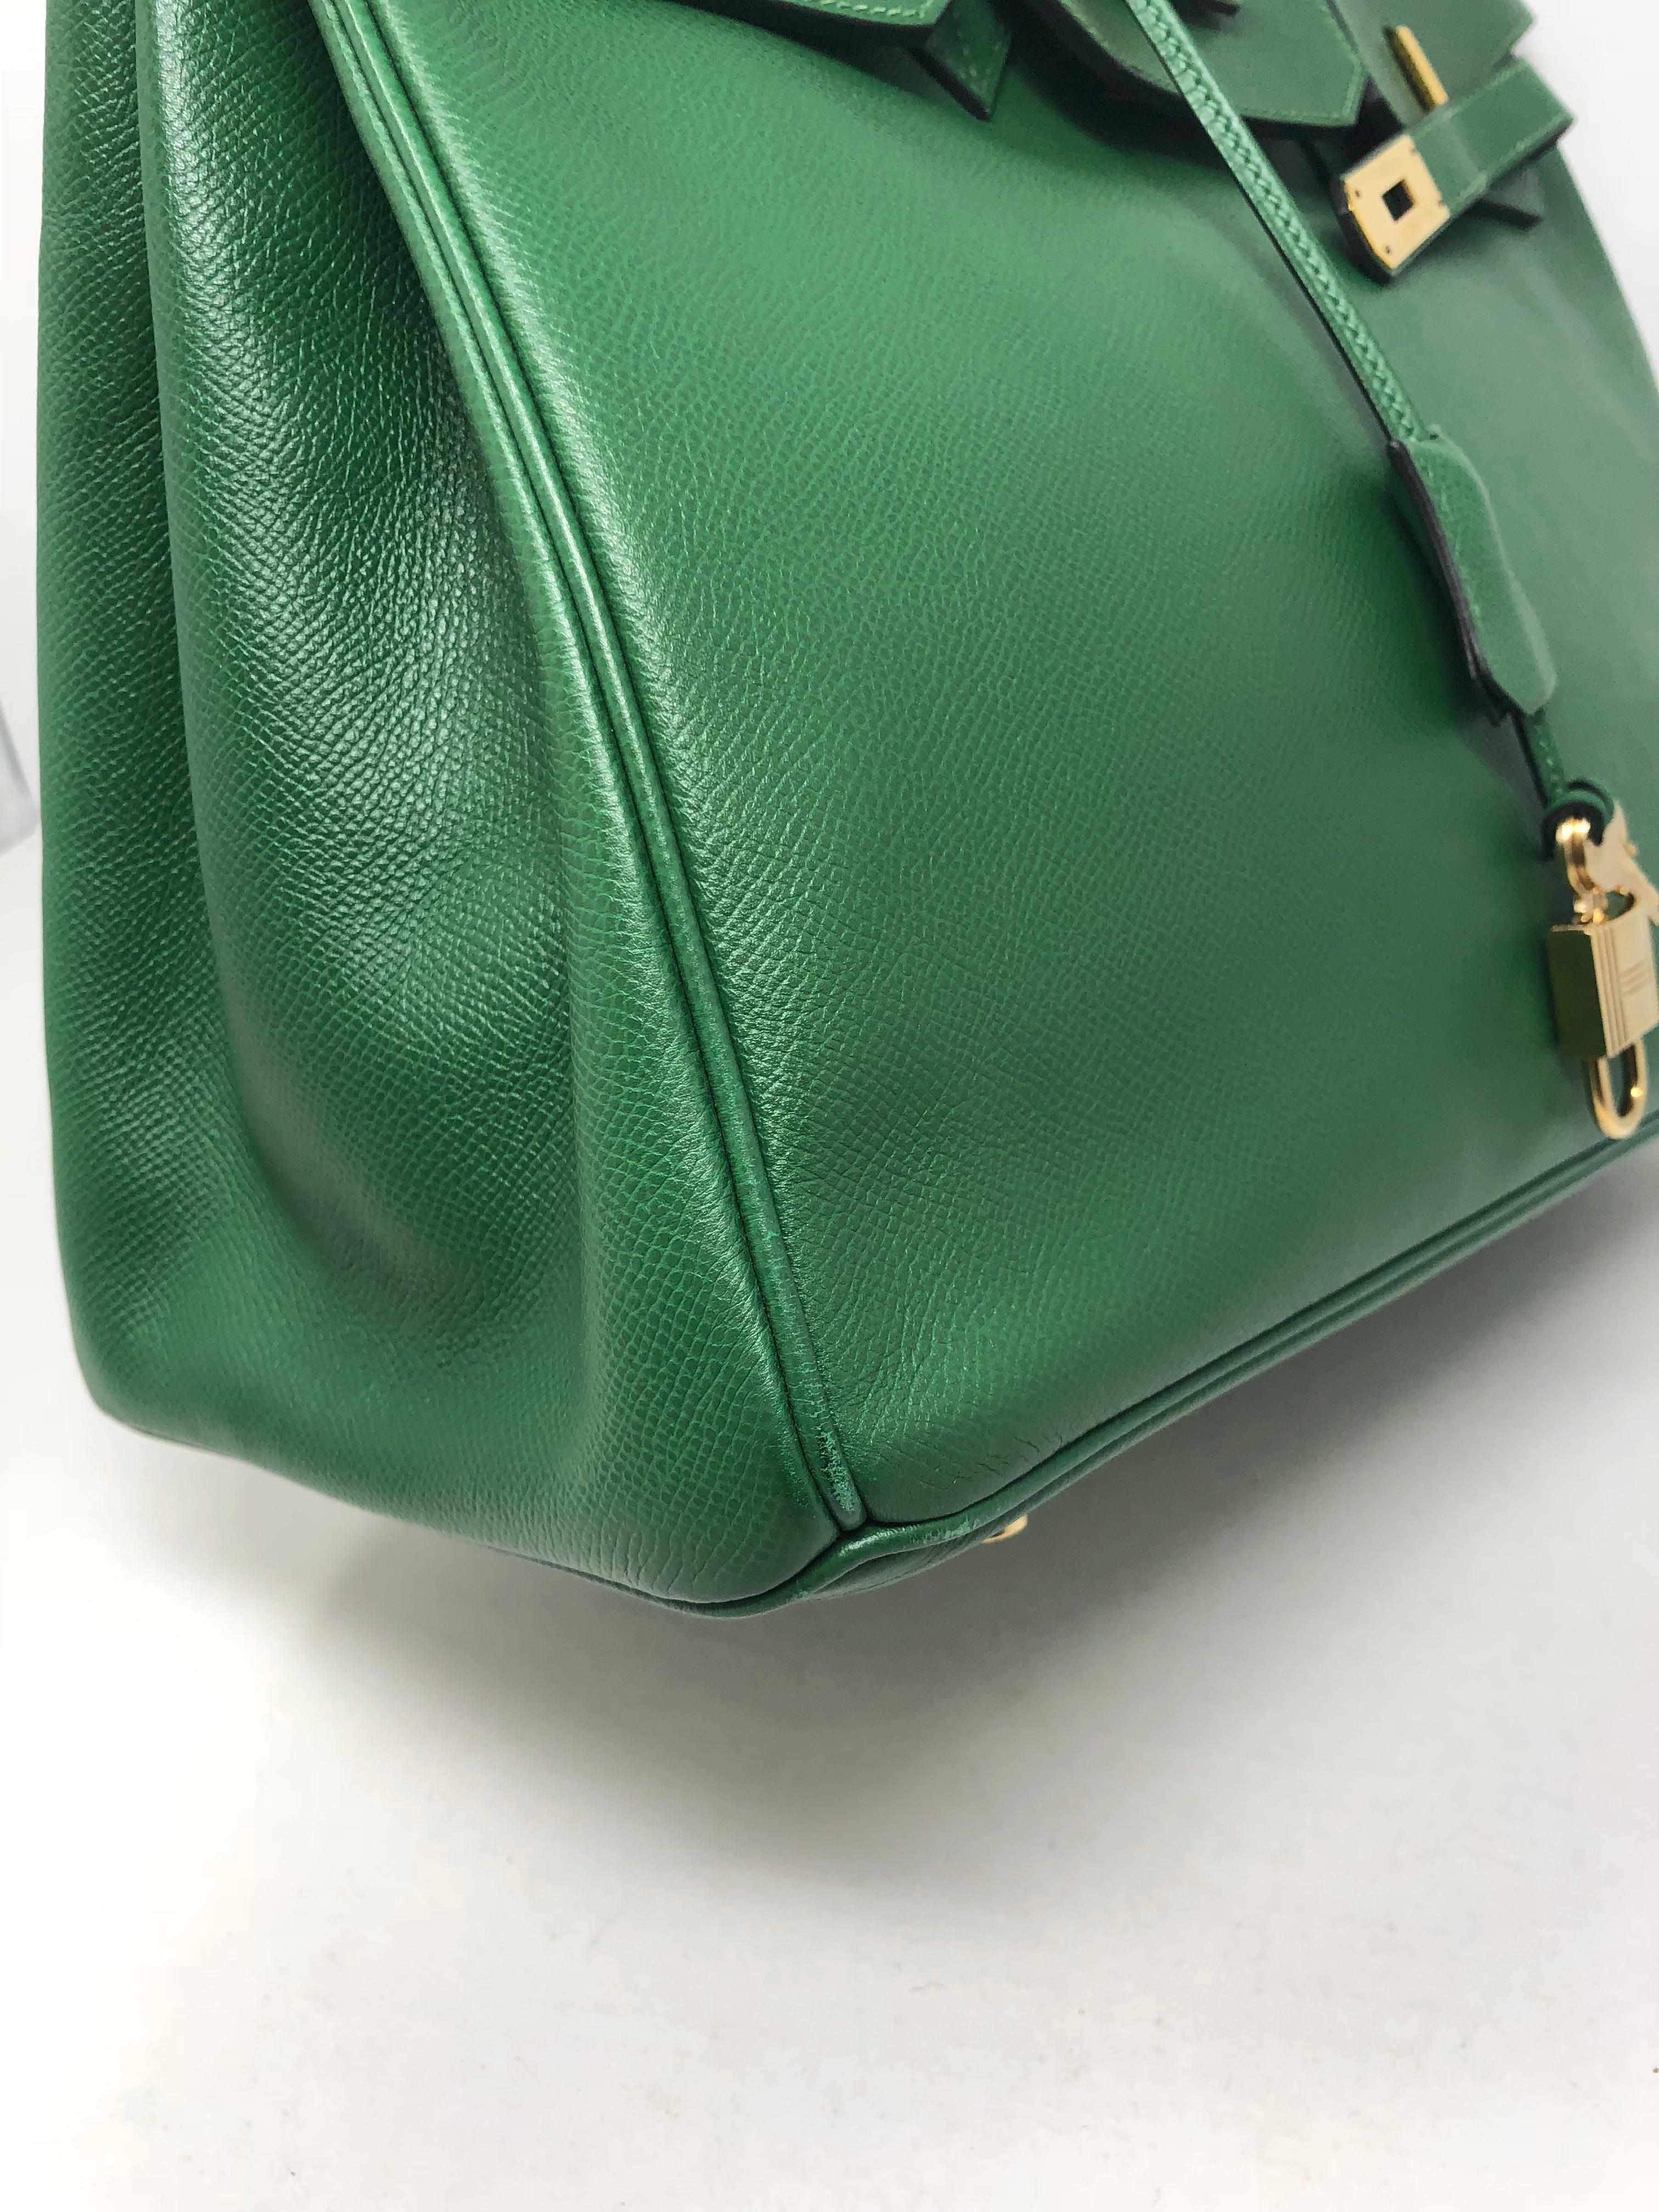 Hermes Emerald Green courchevel leather Gold hardware Birkin 35 Bag 1